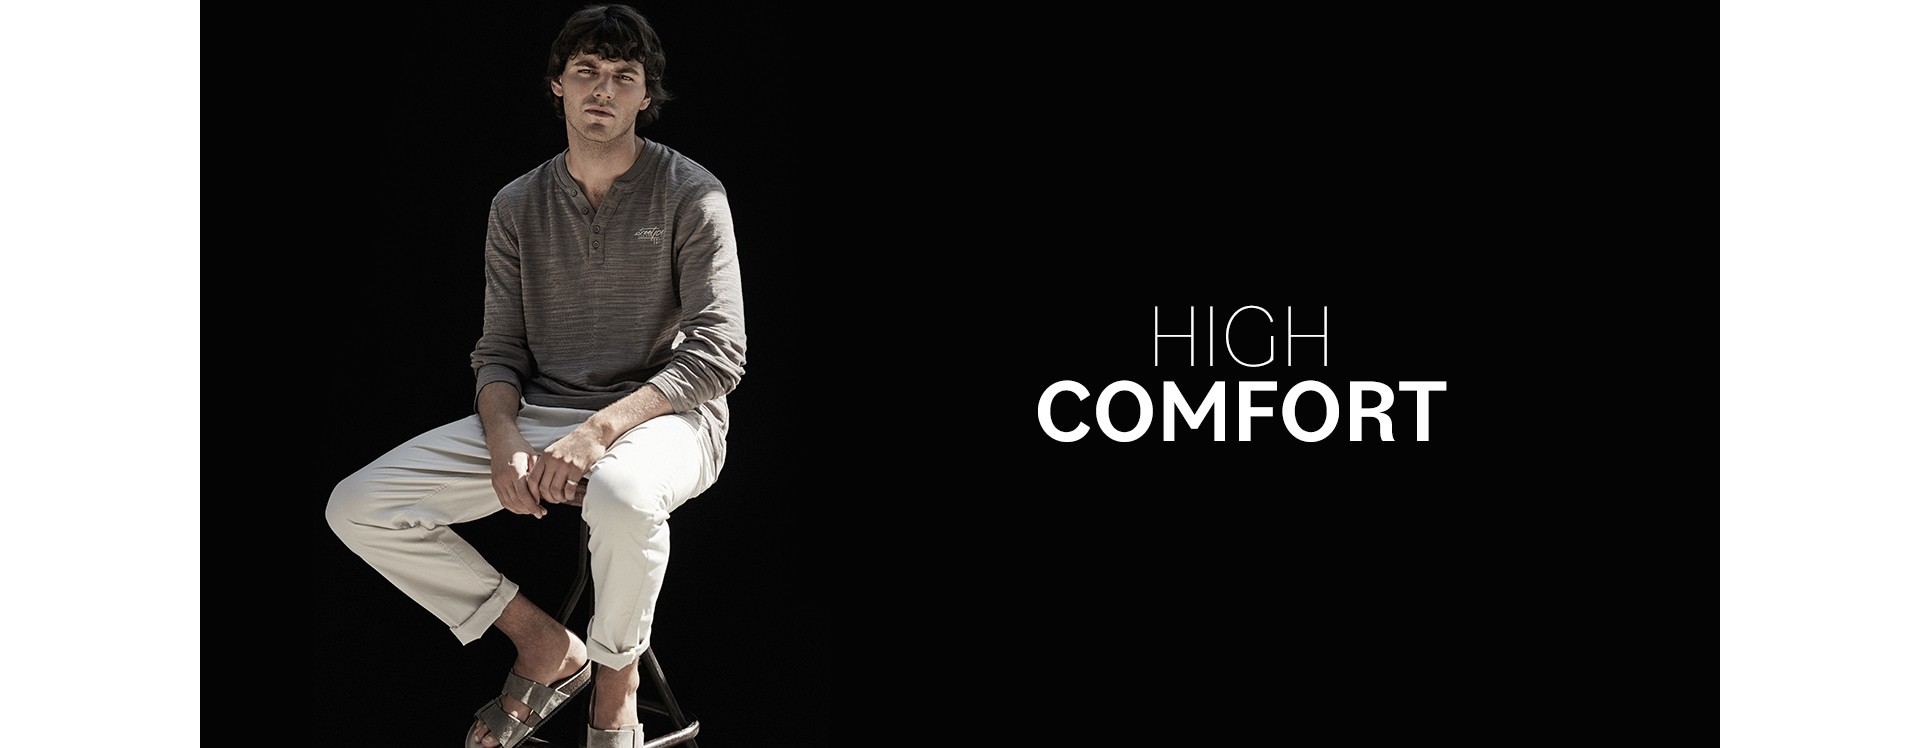 High Comfort